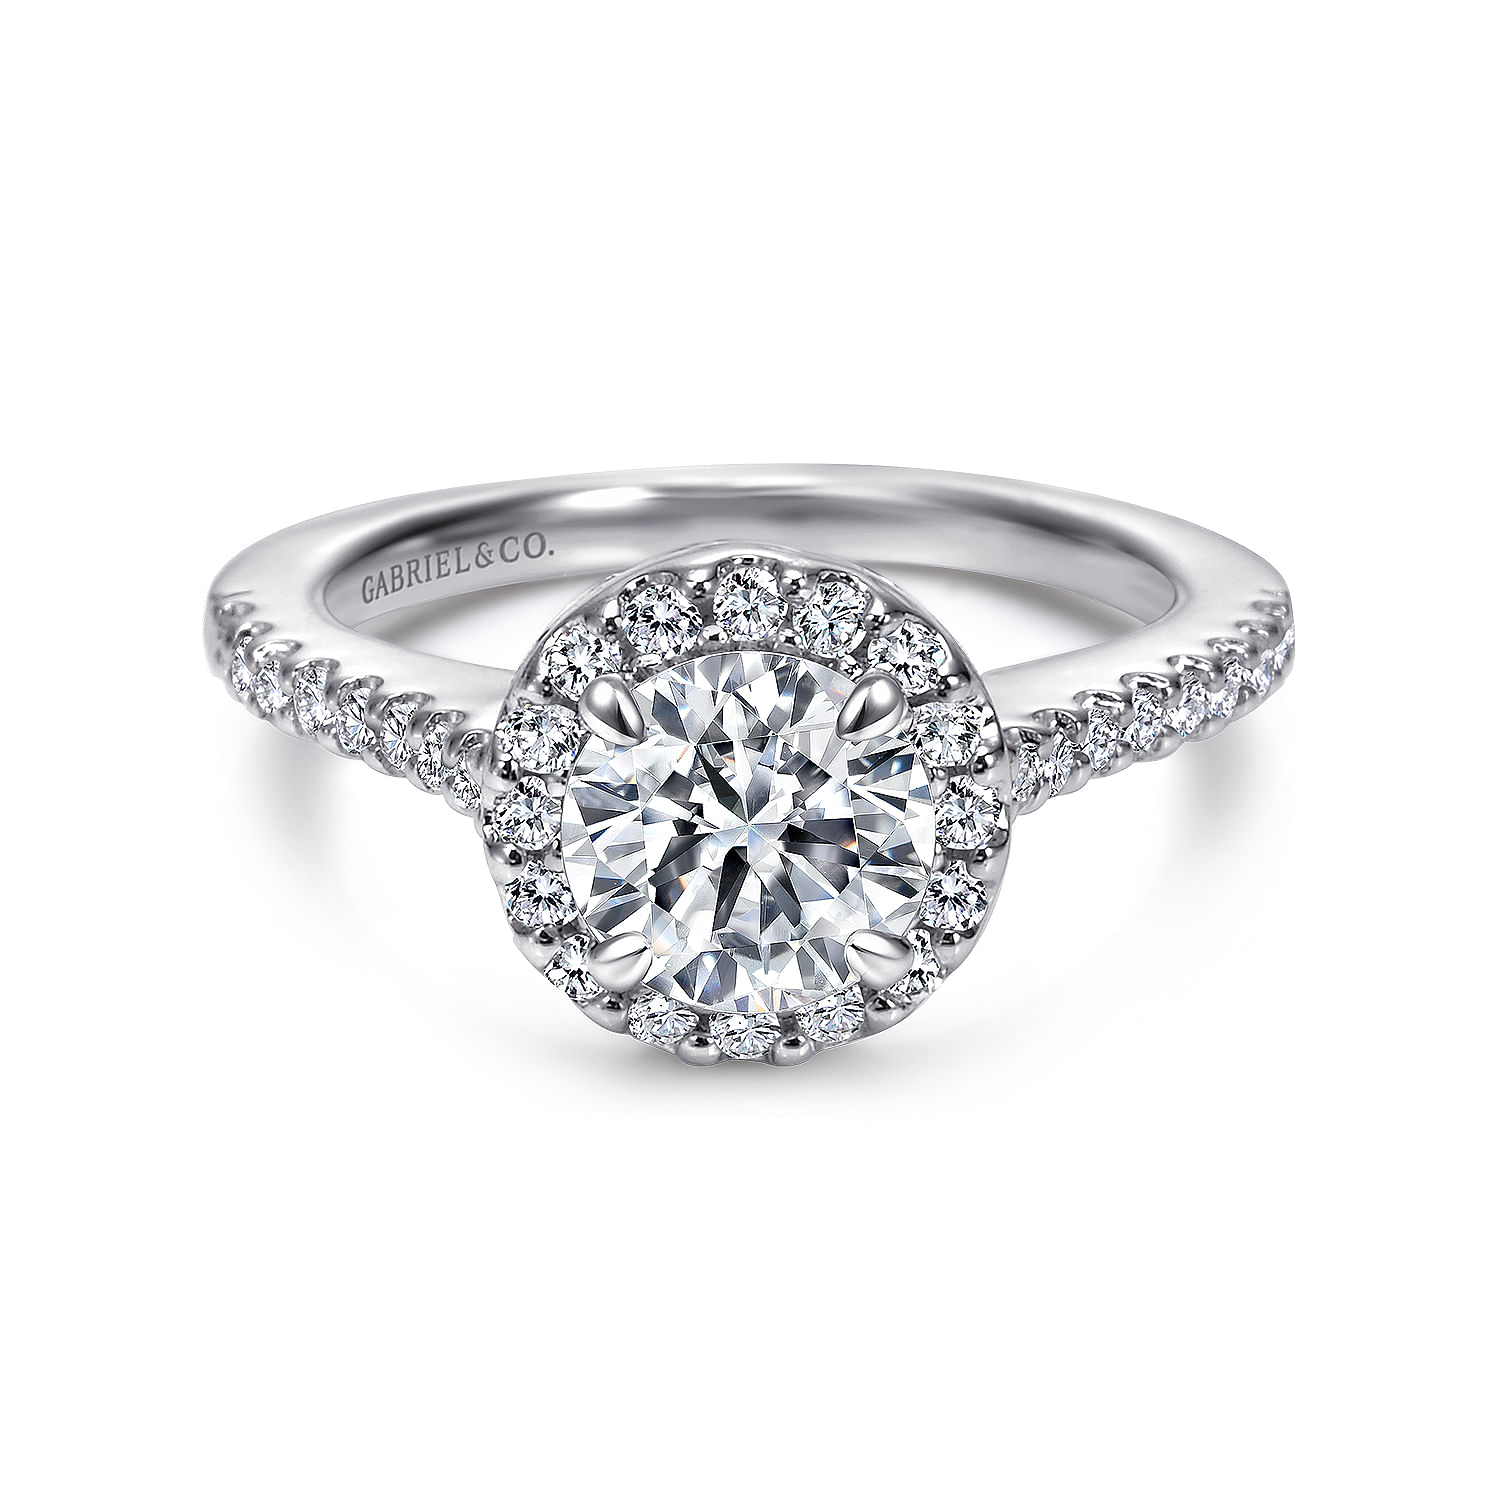 Paige - 14K White Gold Round Halo Diamond Engagement Ring